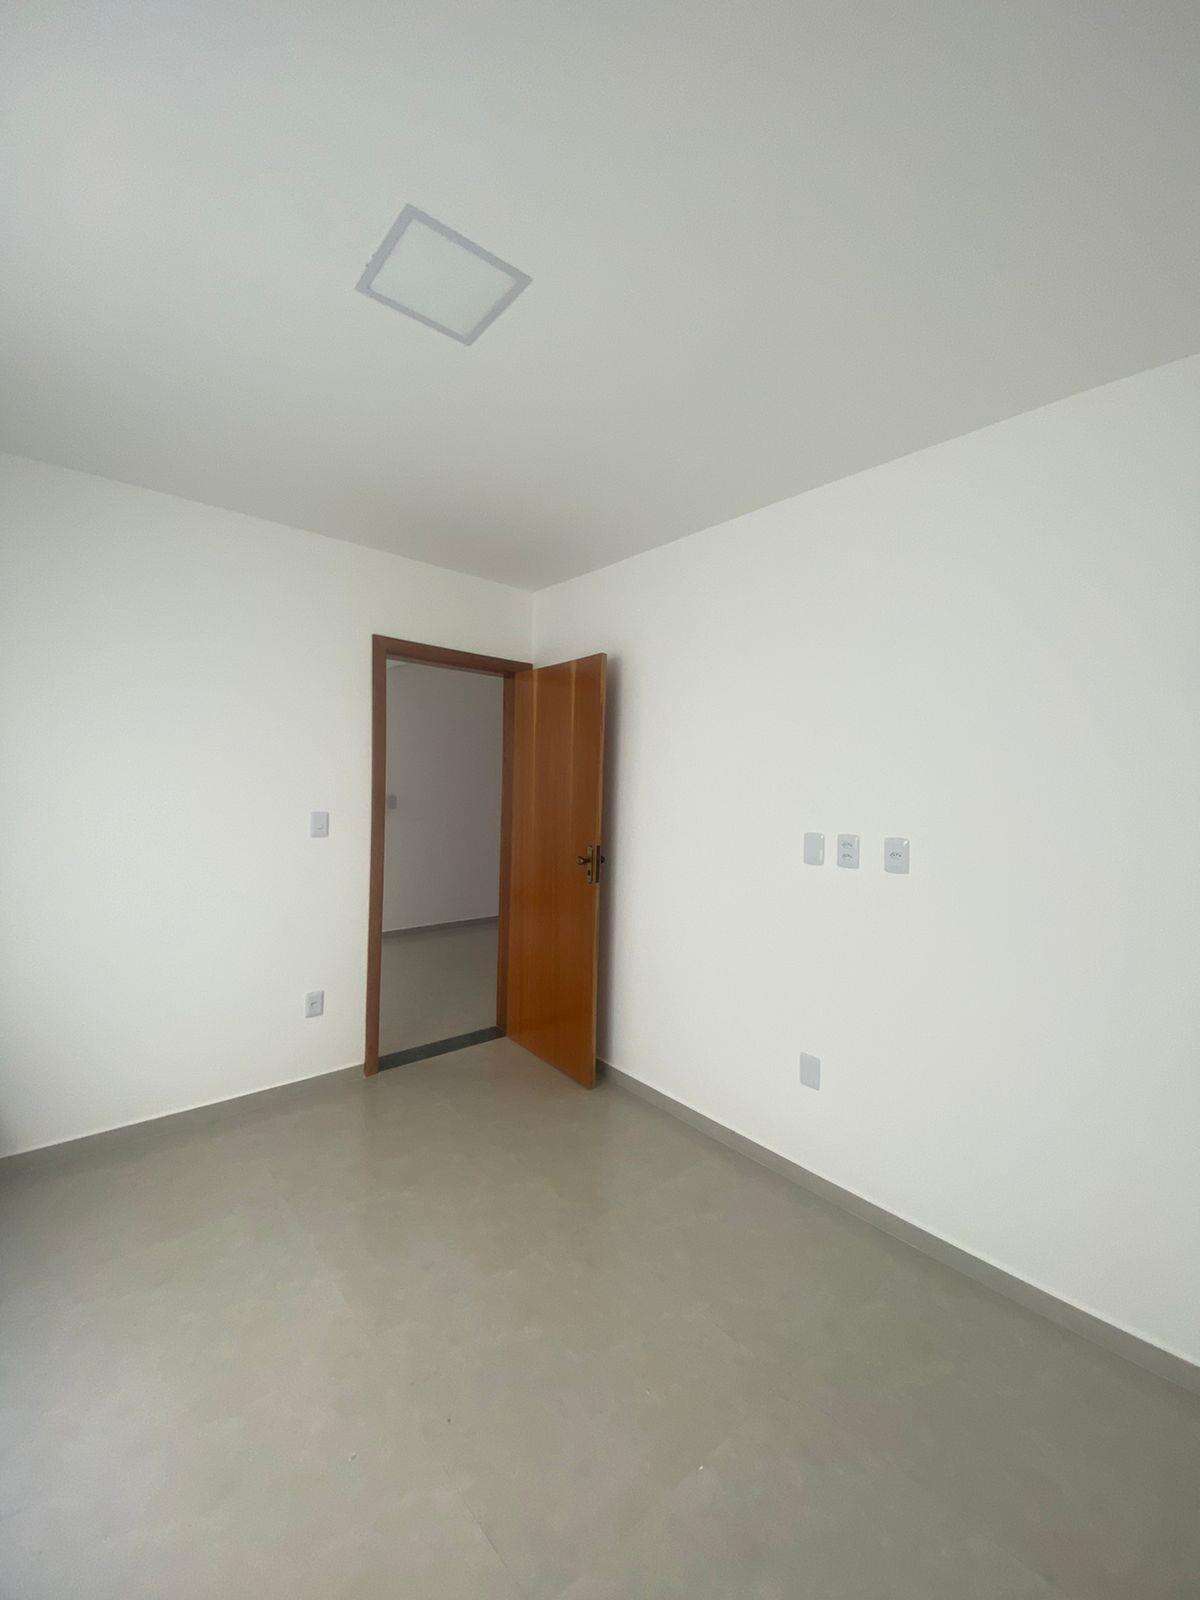 Apartamento 3 quartos para aluguel no Esplanada: 093eafe6-7-whatsapp-image-2023-11-20-at-14.48.30-1.jpeg